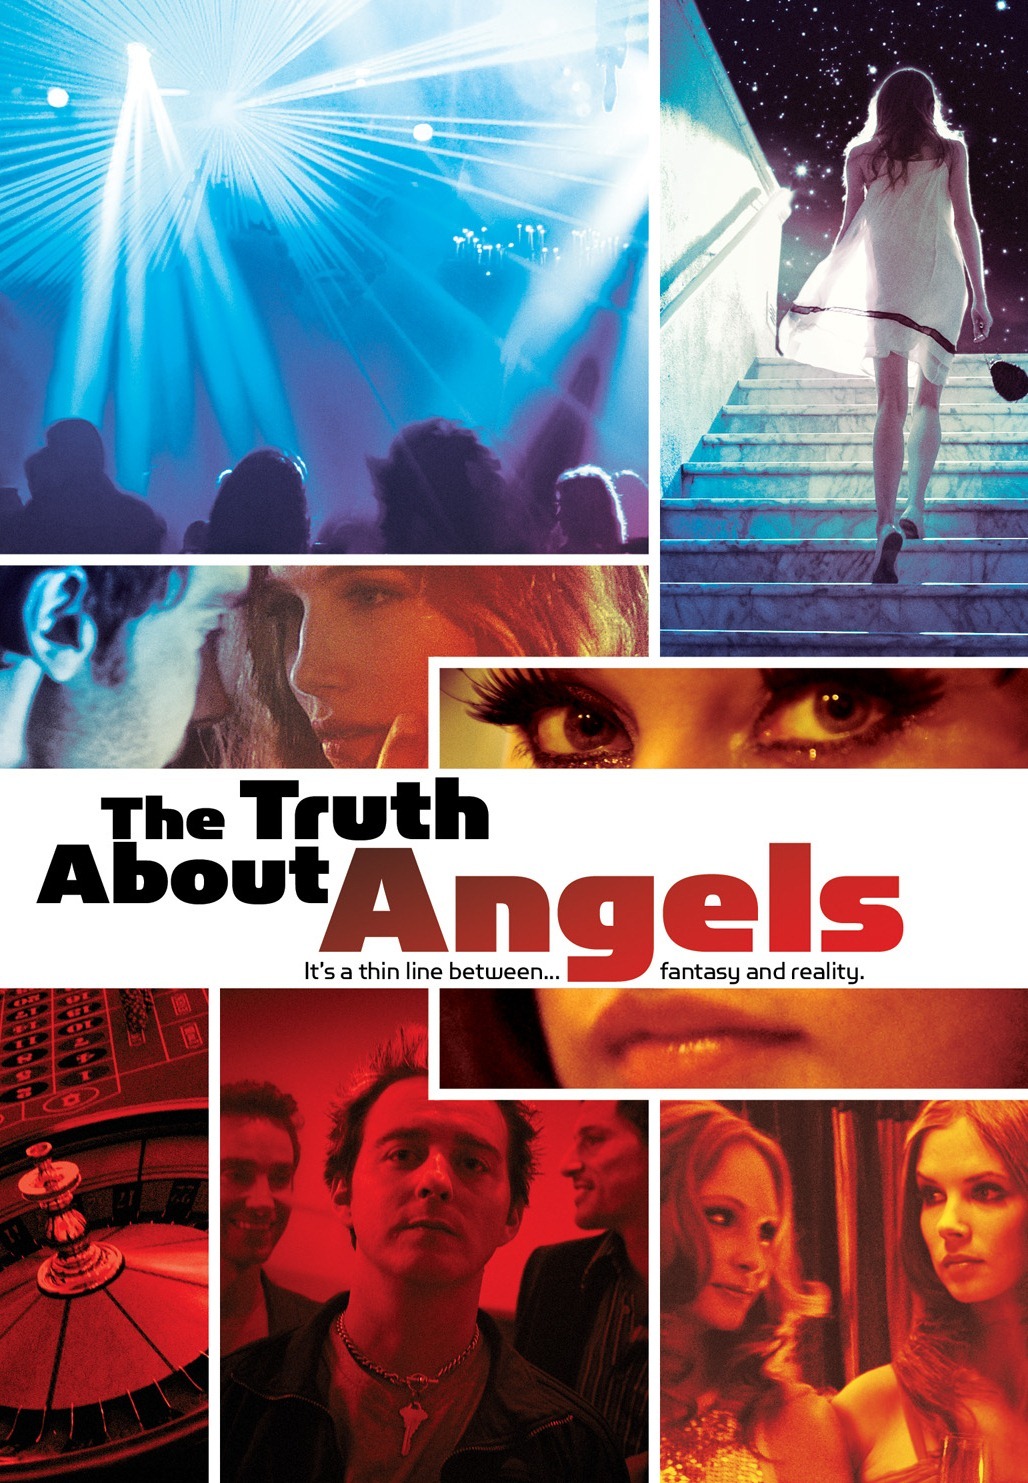 The Truth About Angels 2011 película escenas de desnudos